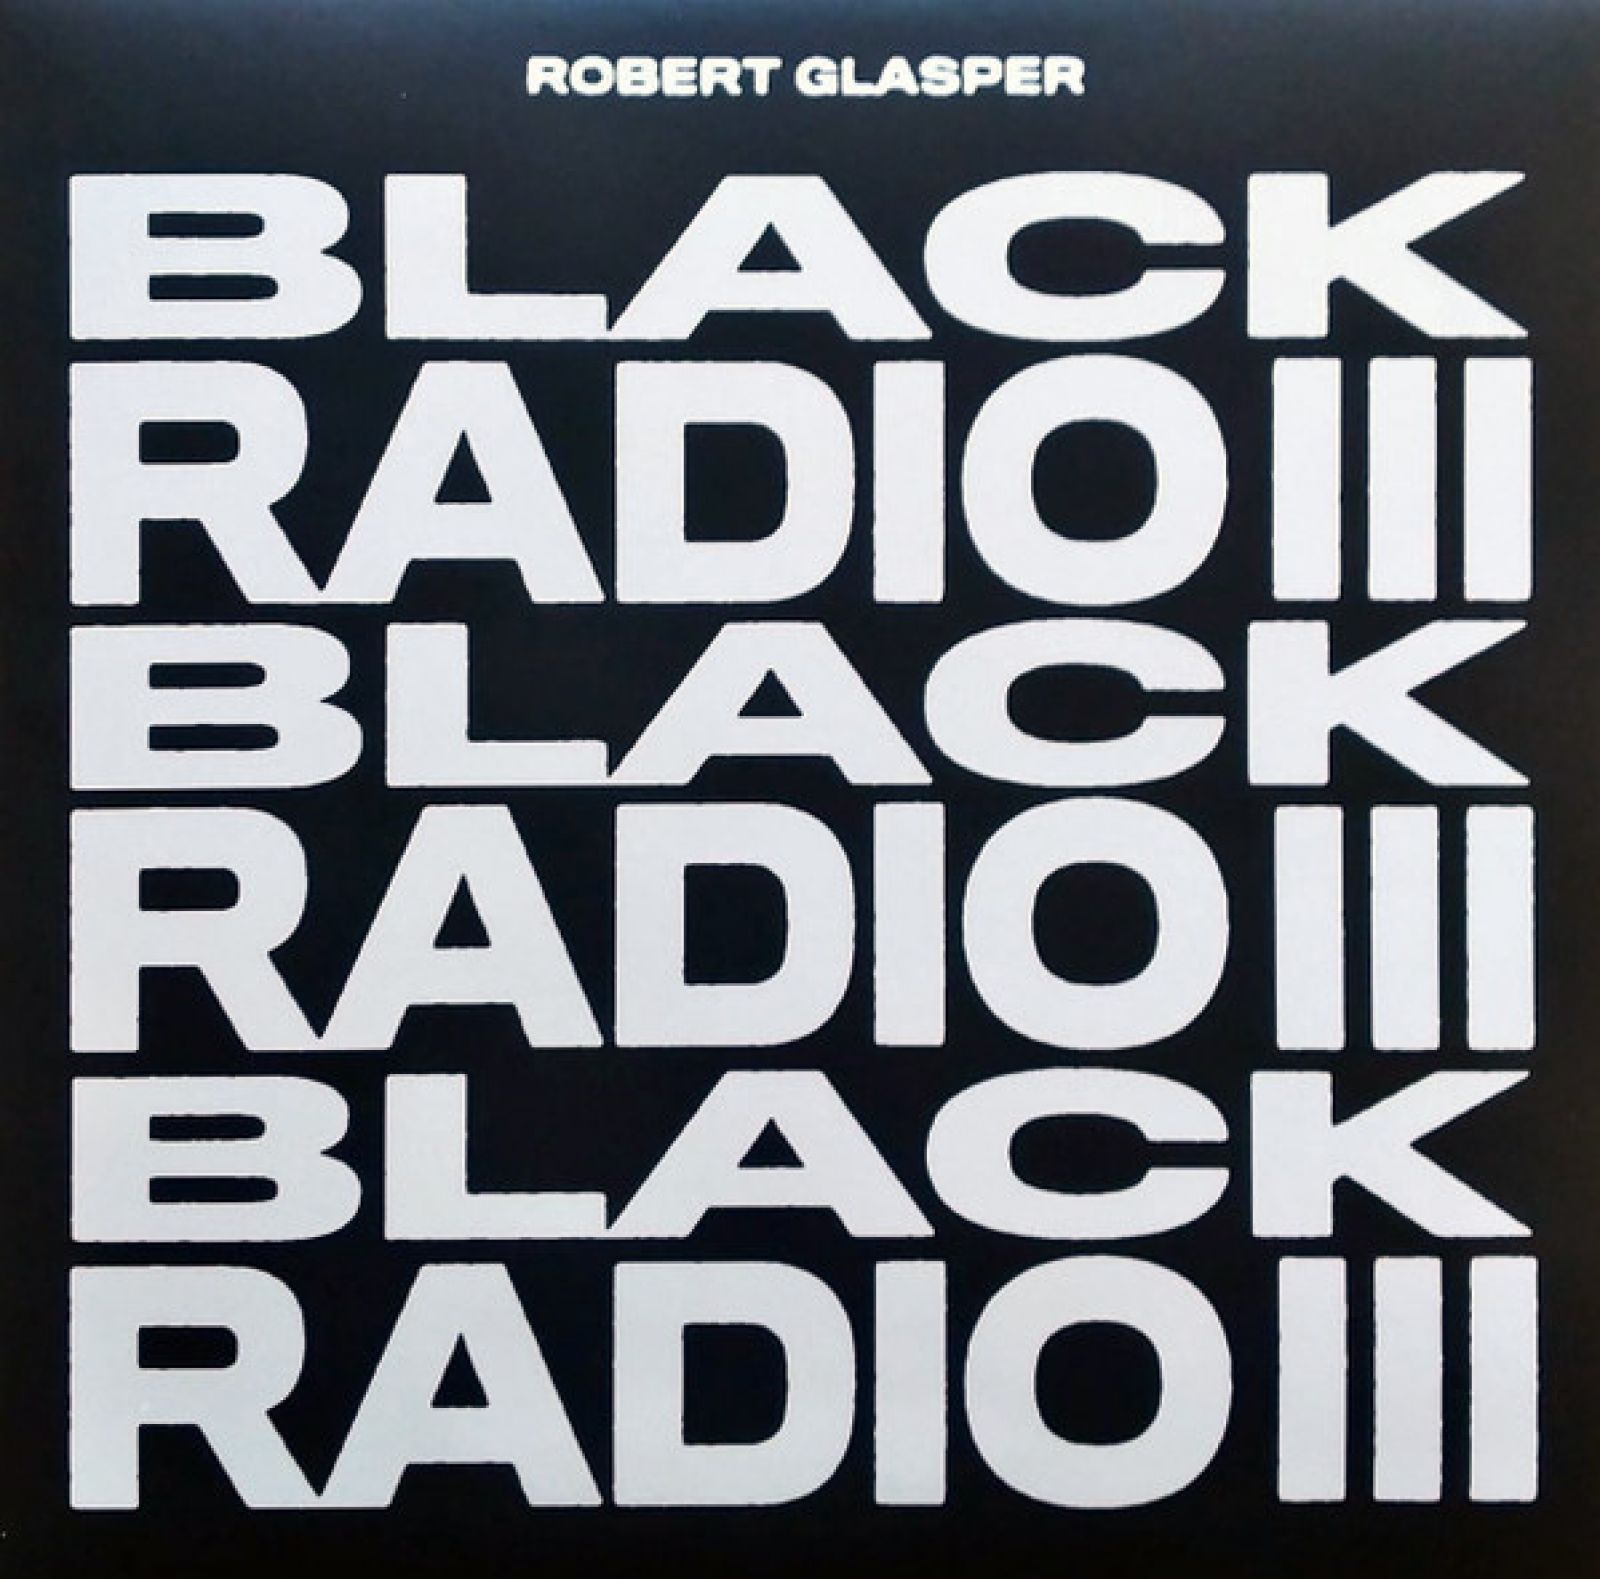 цена Виниловая пластинка Glasper, Robert, Black Radio III (0888072400313)